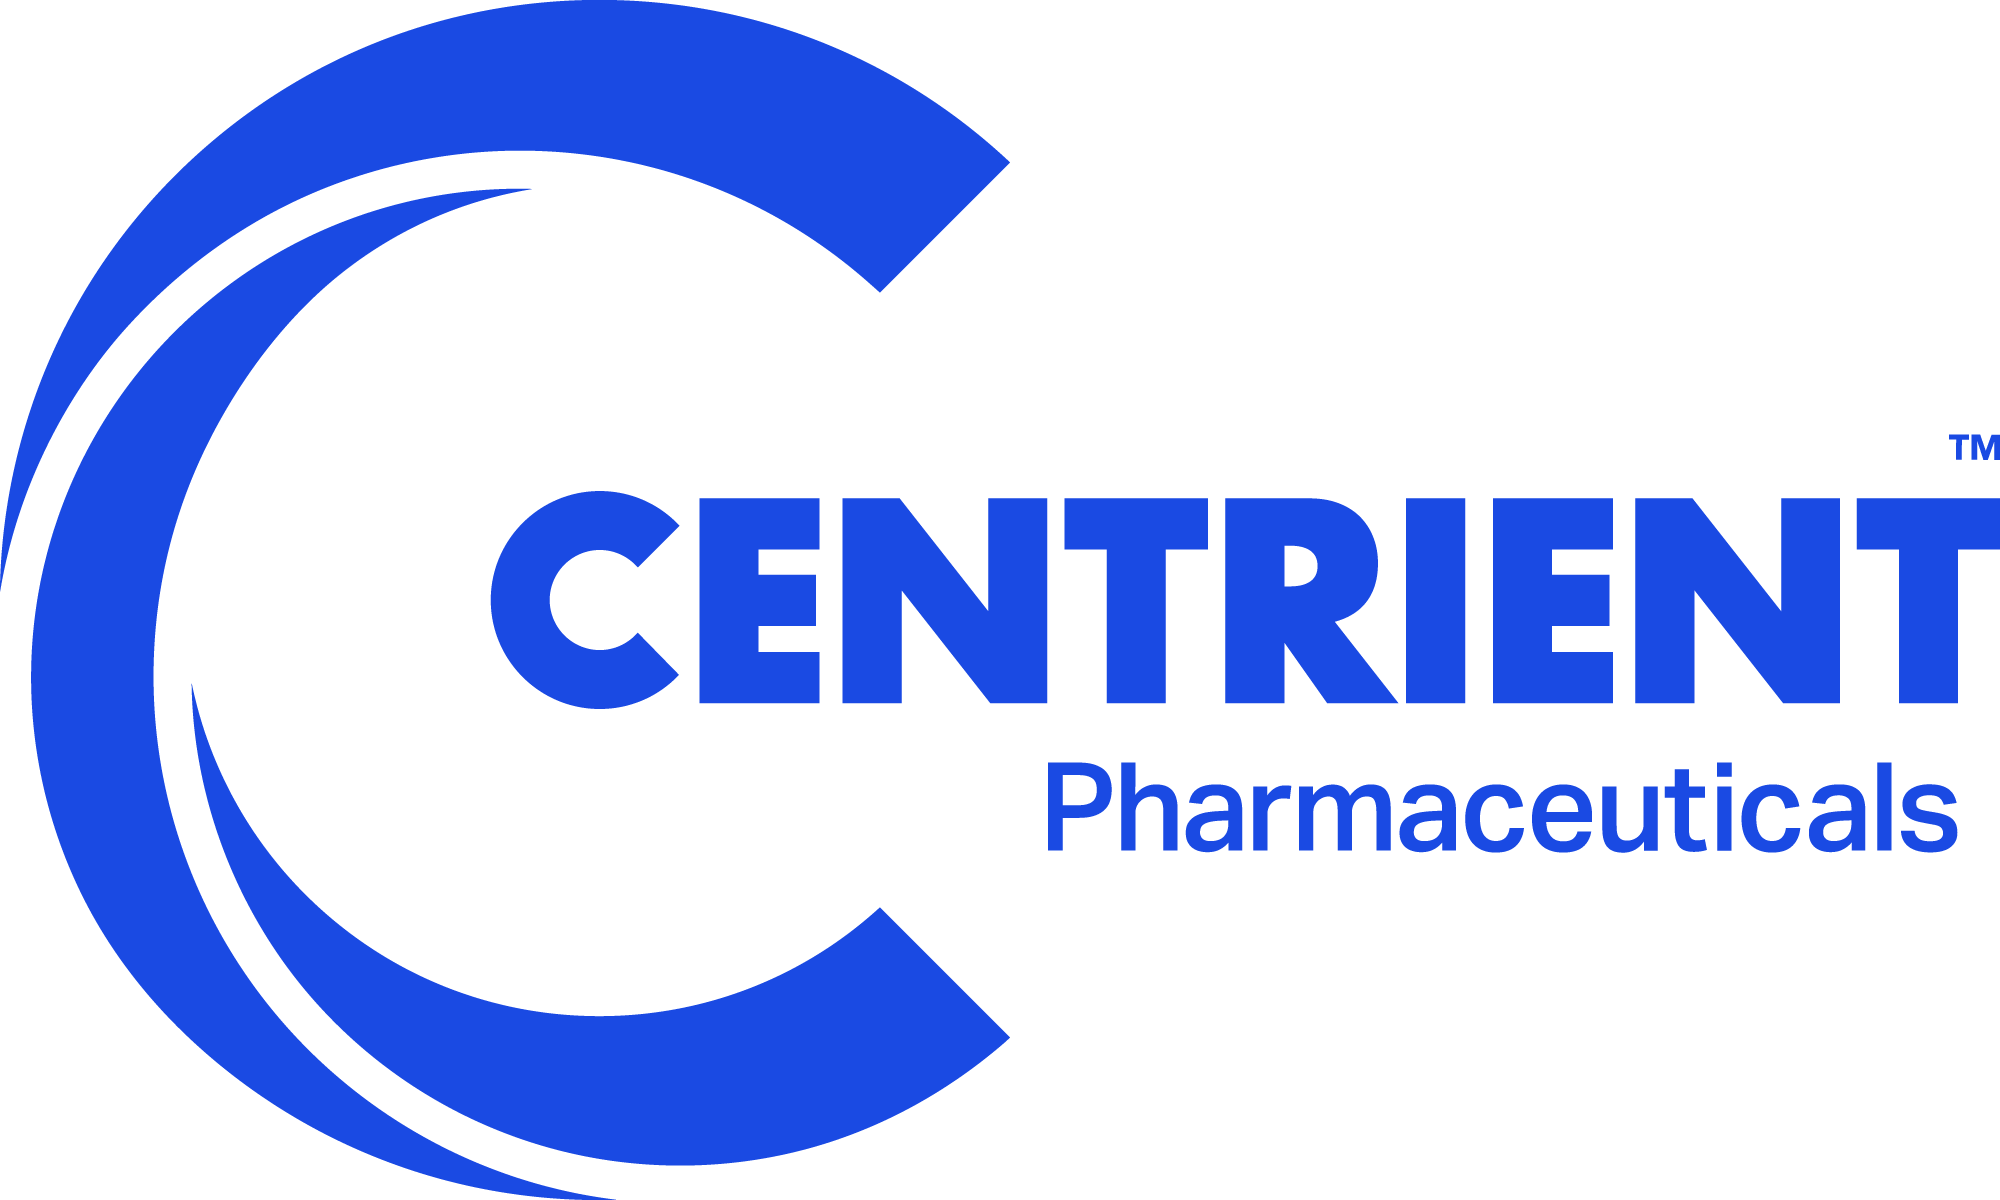 Centrient_Logo-with-descriptor_Blue_RGB_2000x1200px.png